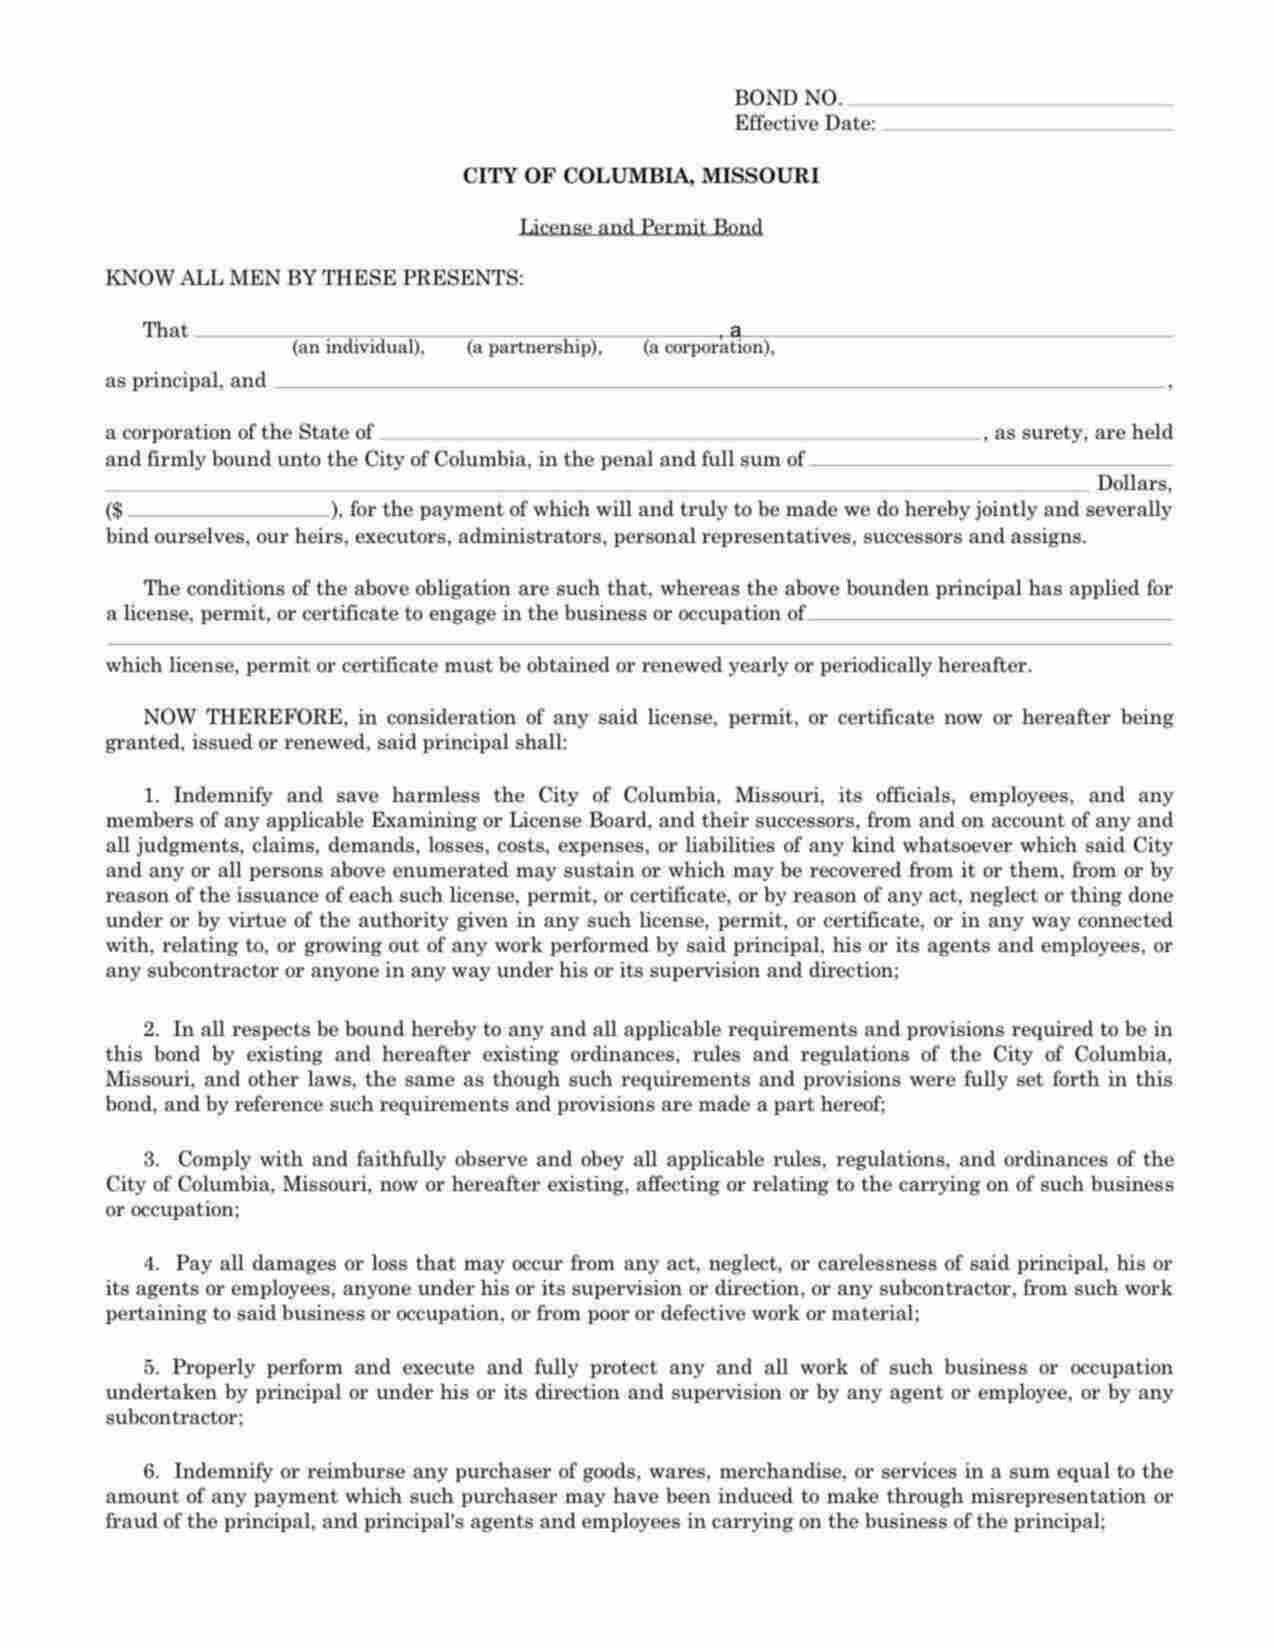 Missouri License and Permit Bond Form